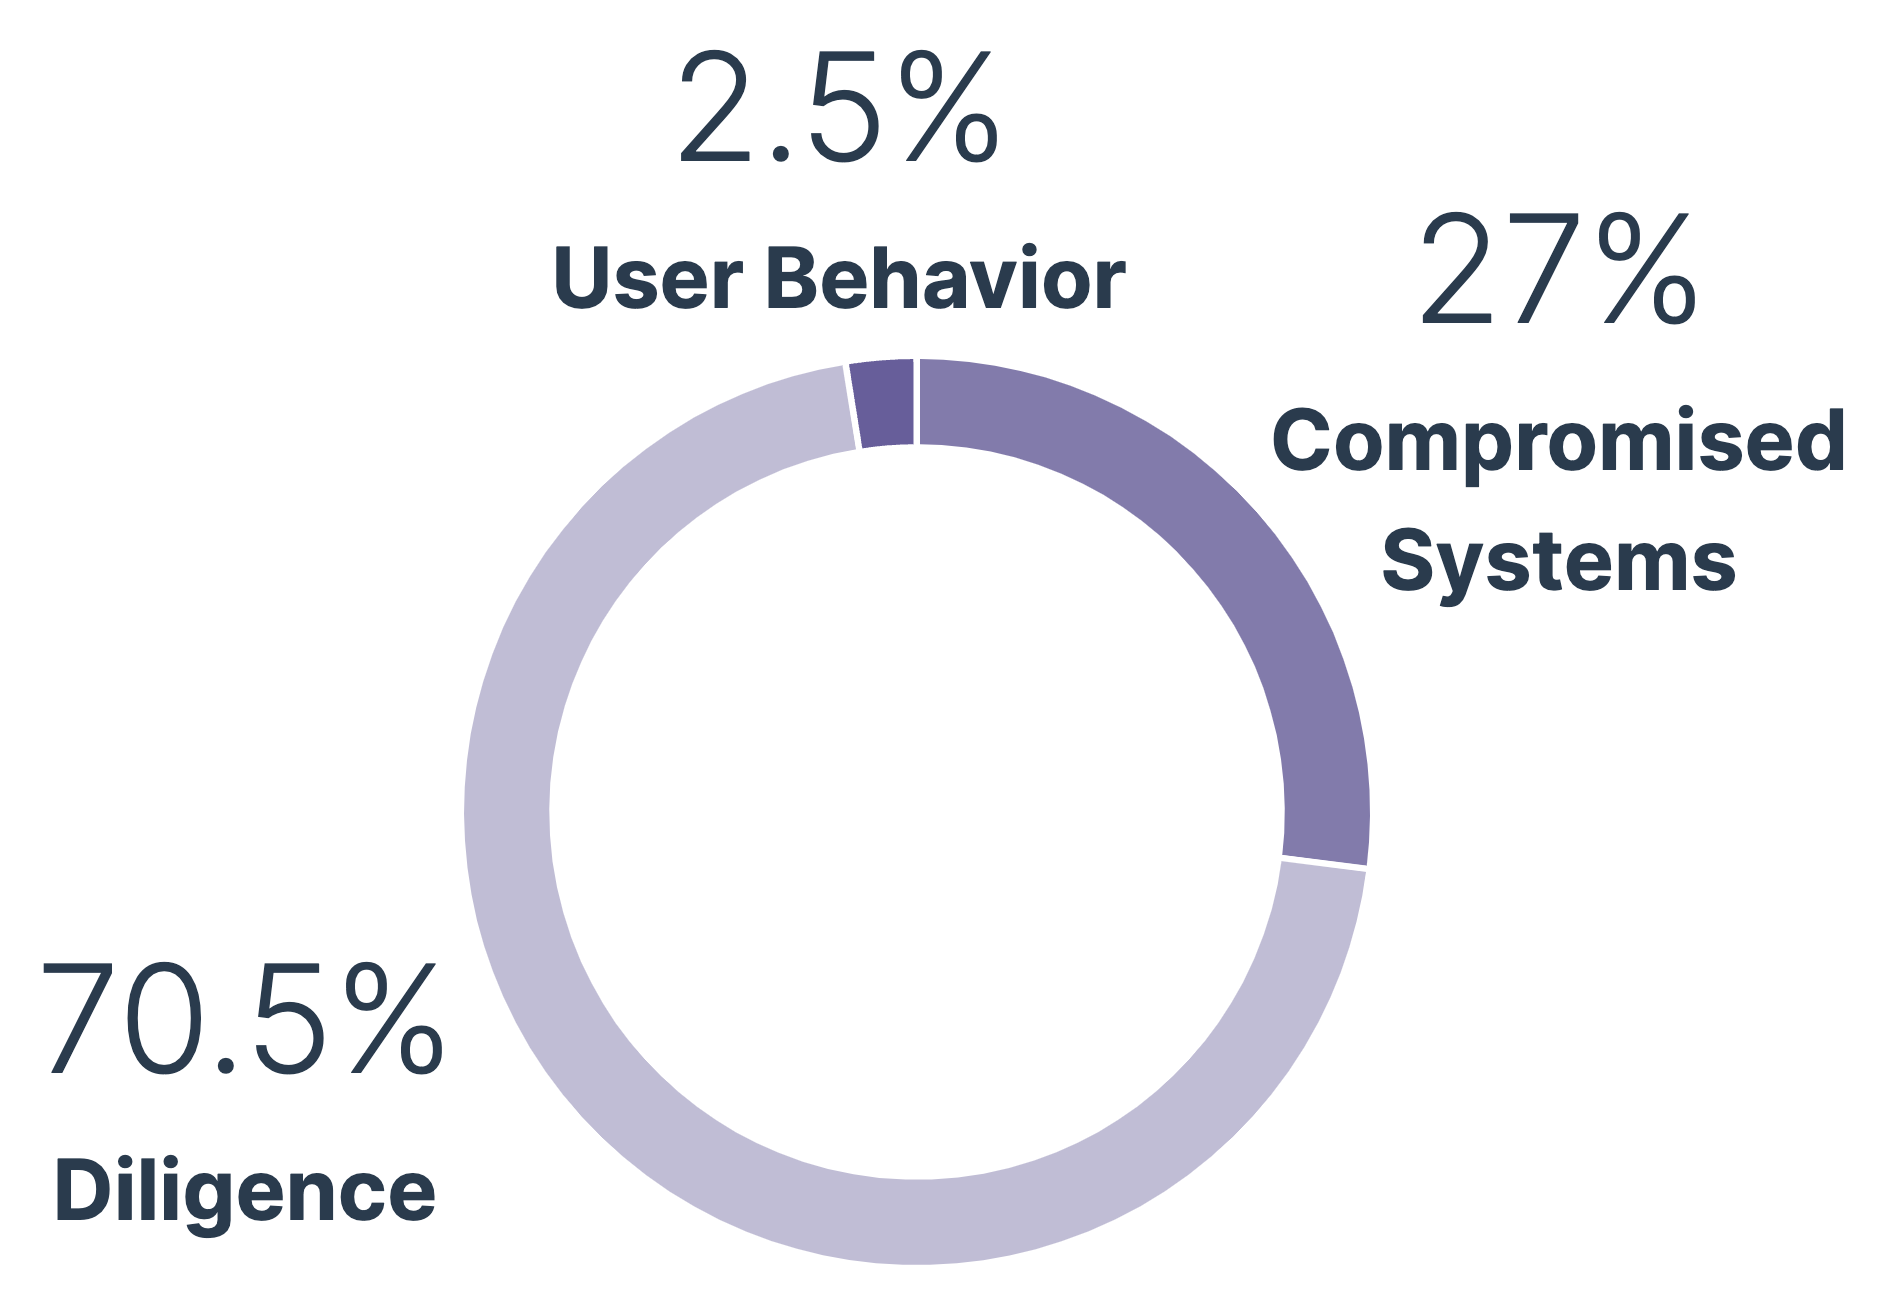 27% Compromised Systems, 70.5 Diligence, 2.5% User Behavior